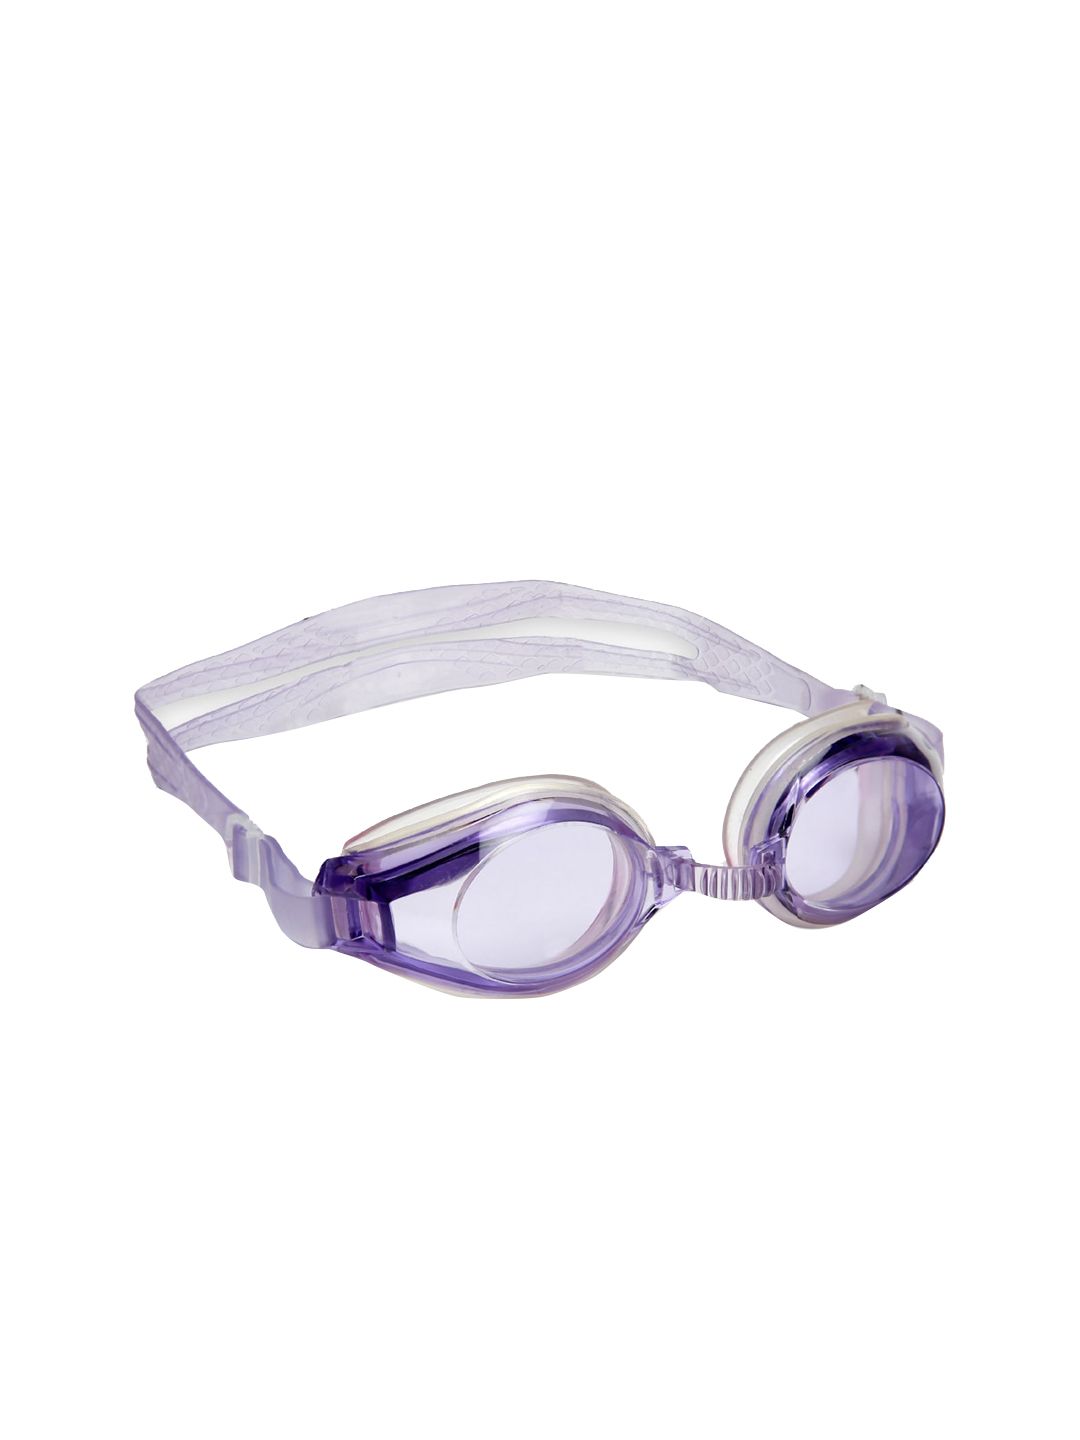 CUKOO Women Purple Swimming Goggles Price in India